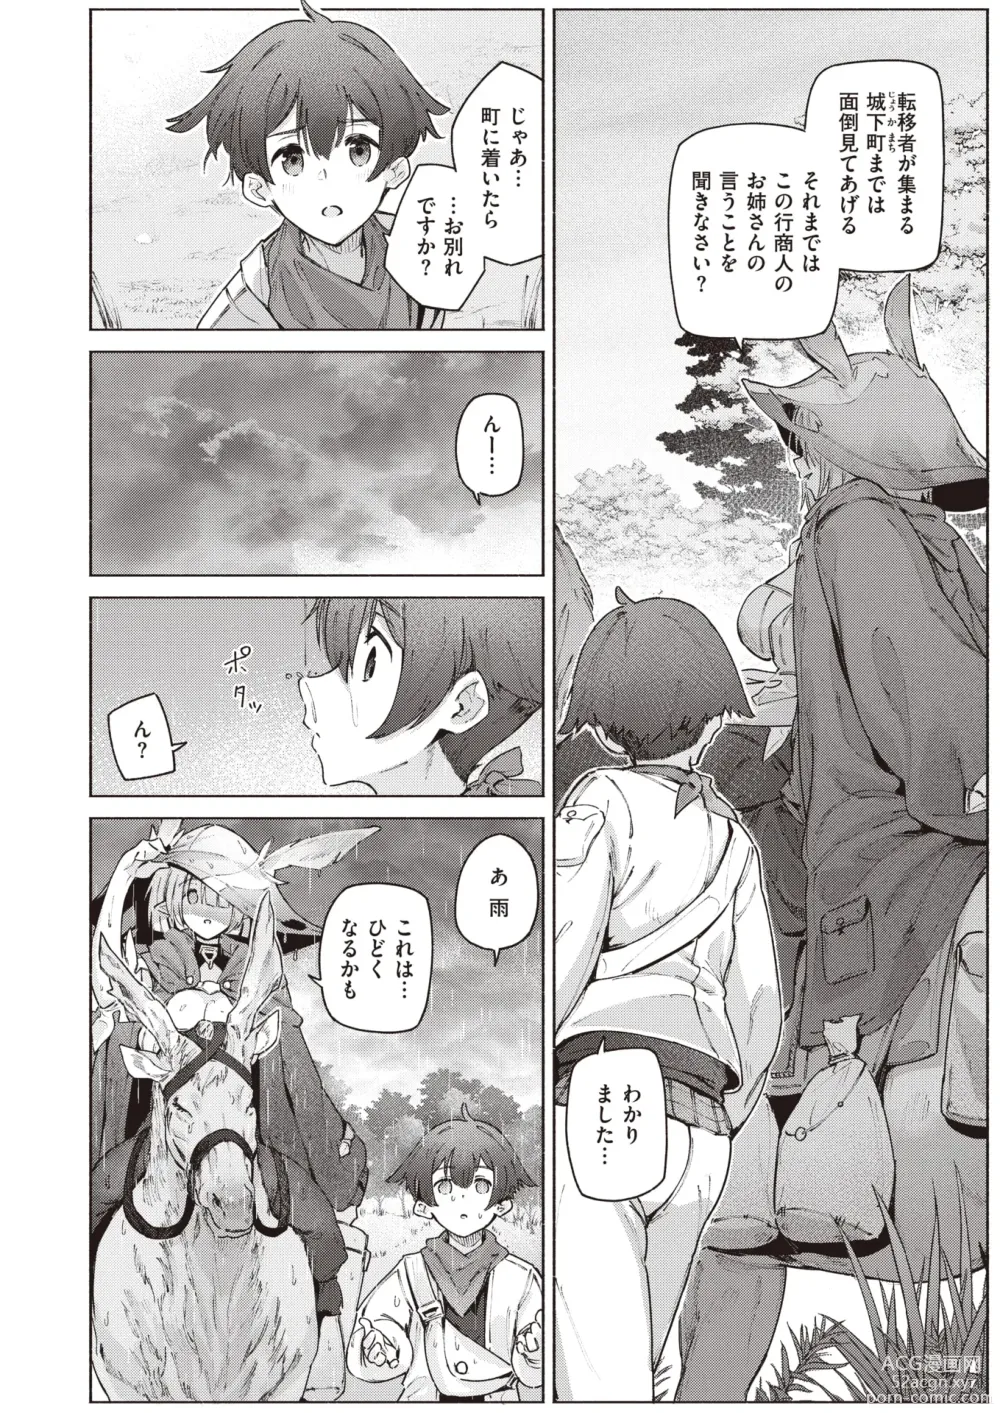 Page 7 of manga Isekai Rakuten Vol. 27